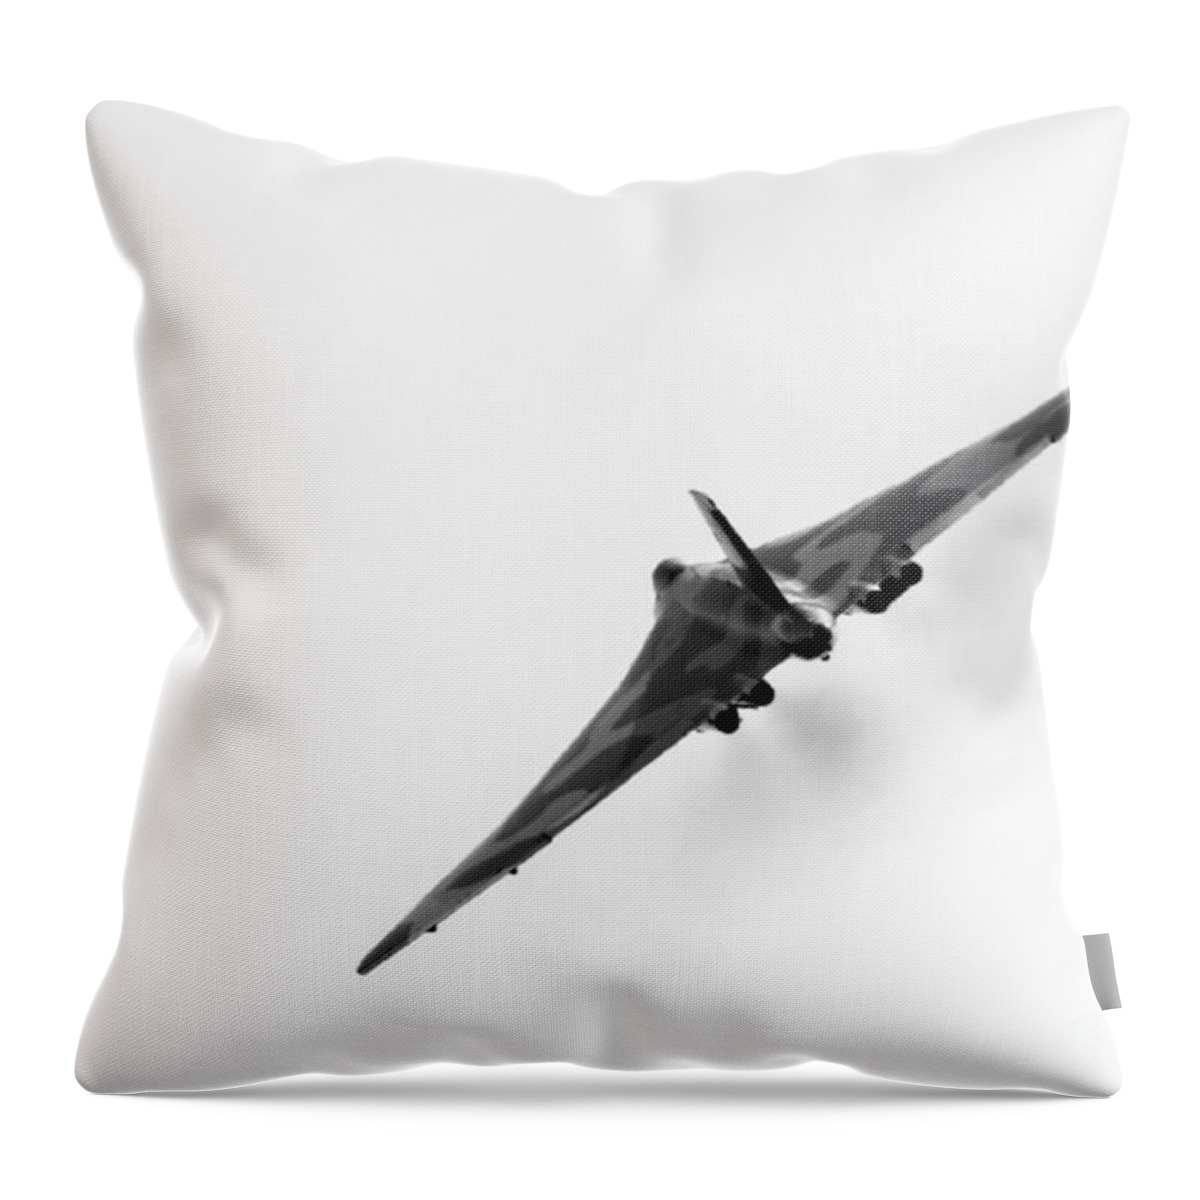 Vulcan Bomber Throw Pillow featuring the photograph Avro Vulcan XH558 by Airpower Art